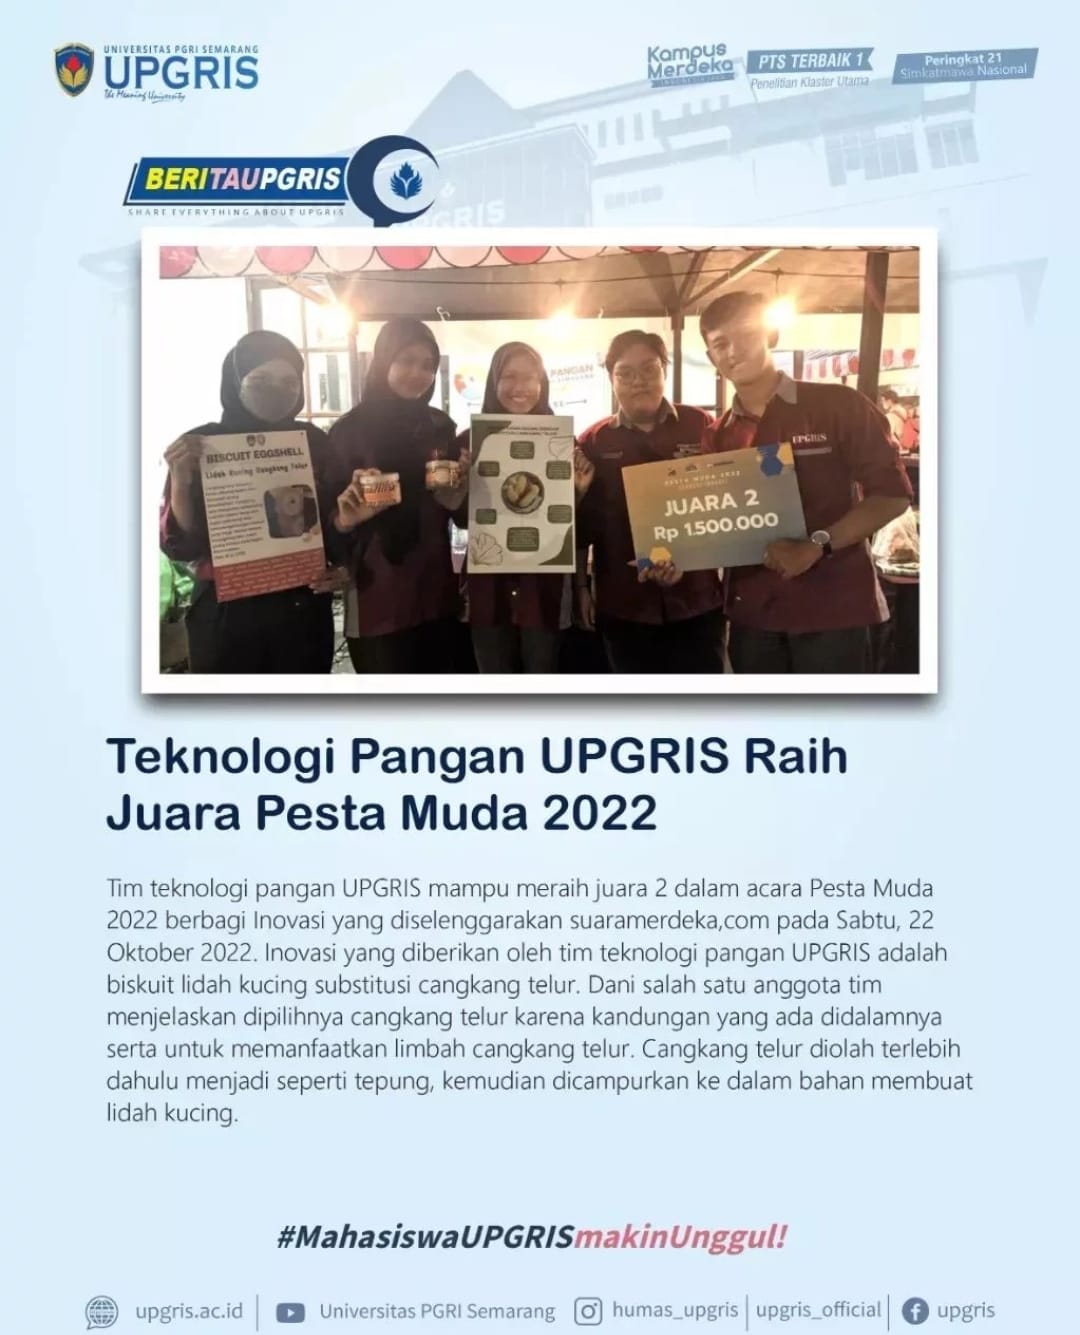 Mahasiswa Teknologi Pangan UPGRIS Raih Juara Pesta Muda 2022